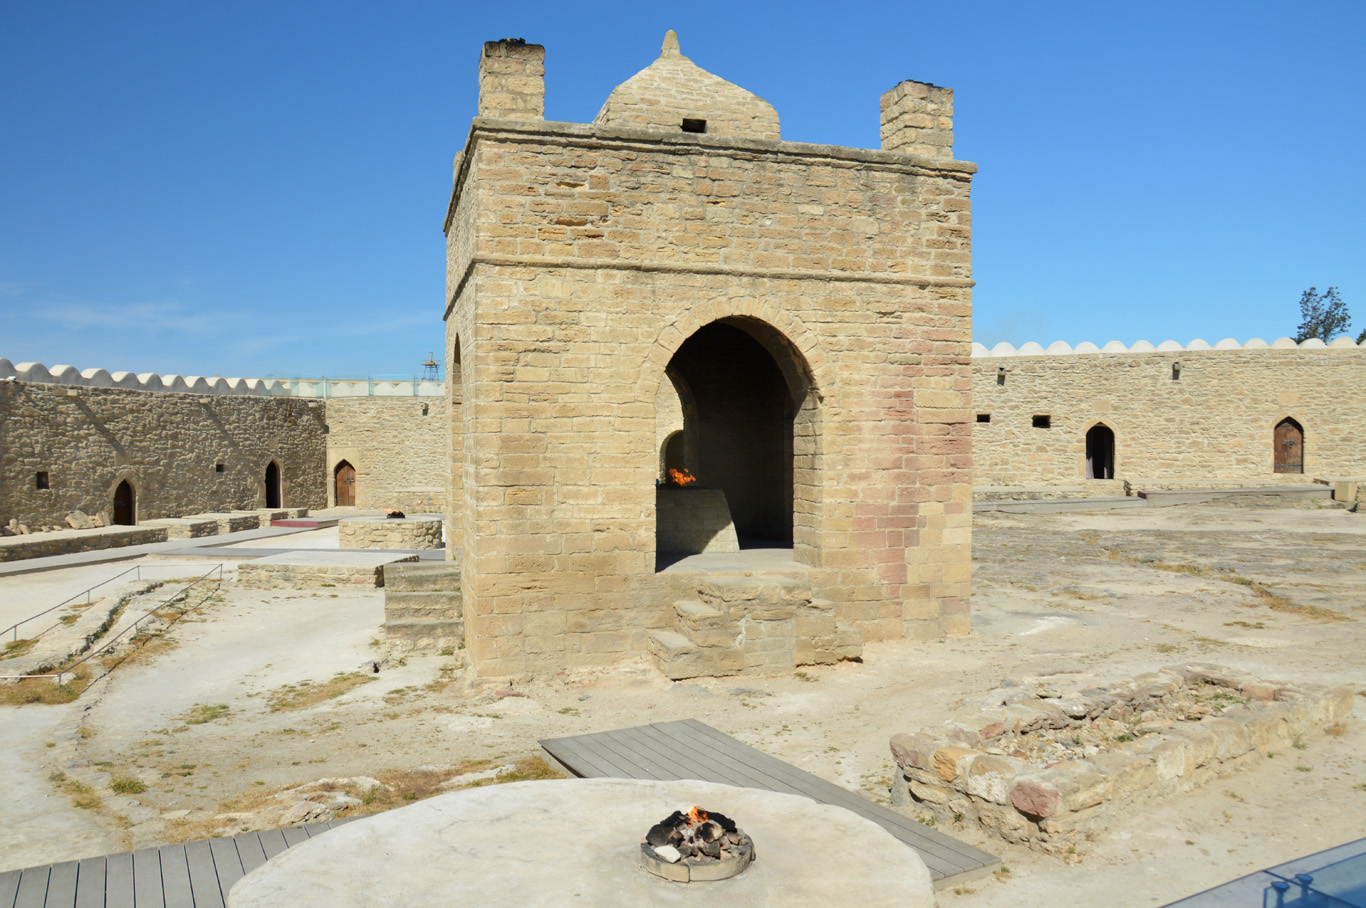   Ateshgah  Zaroastrian Temple     more info   